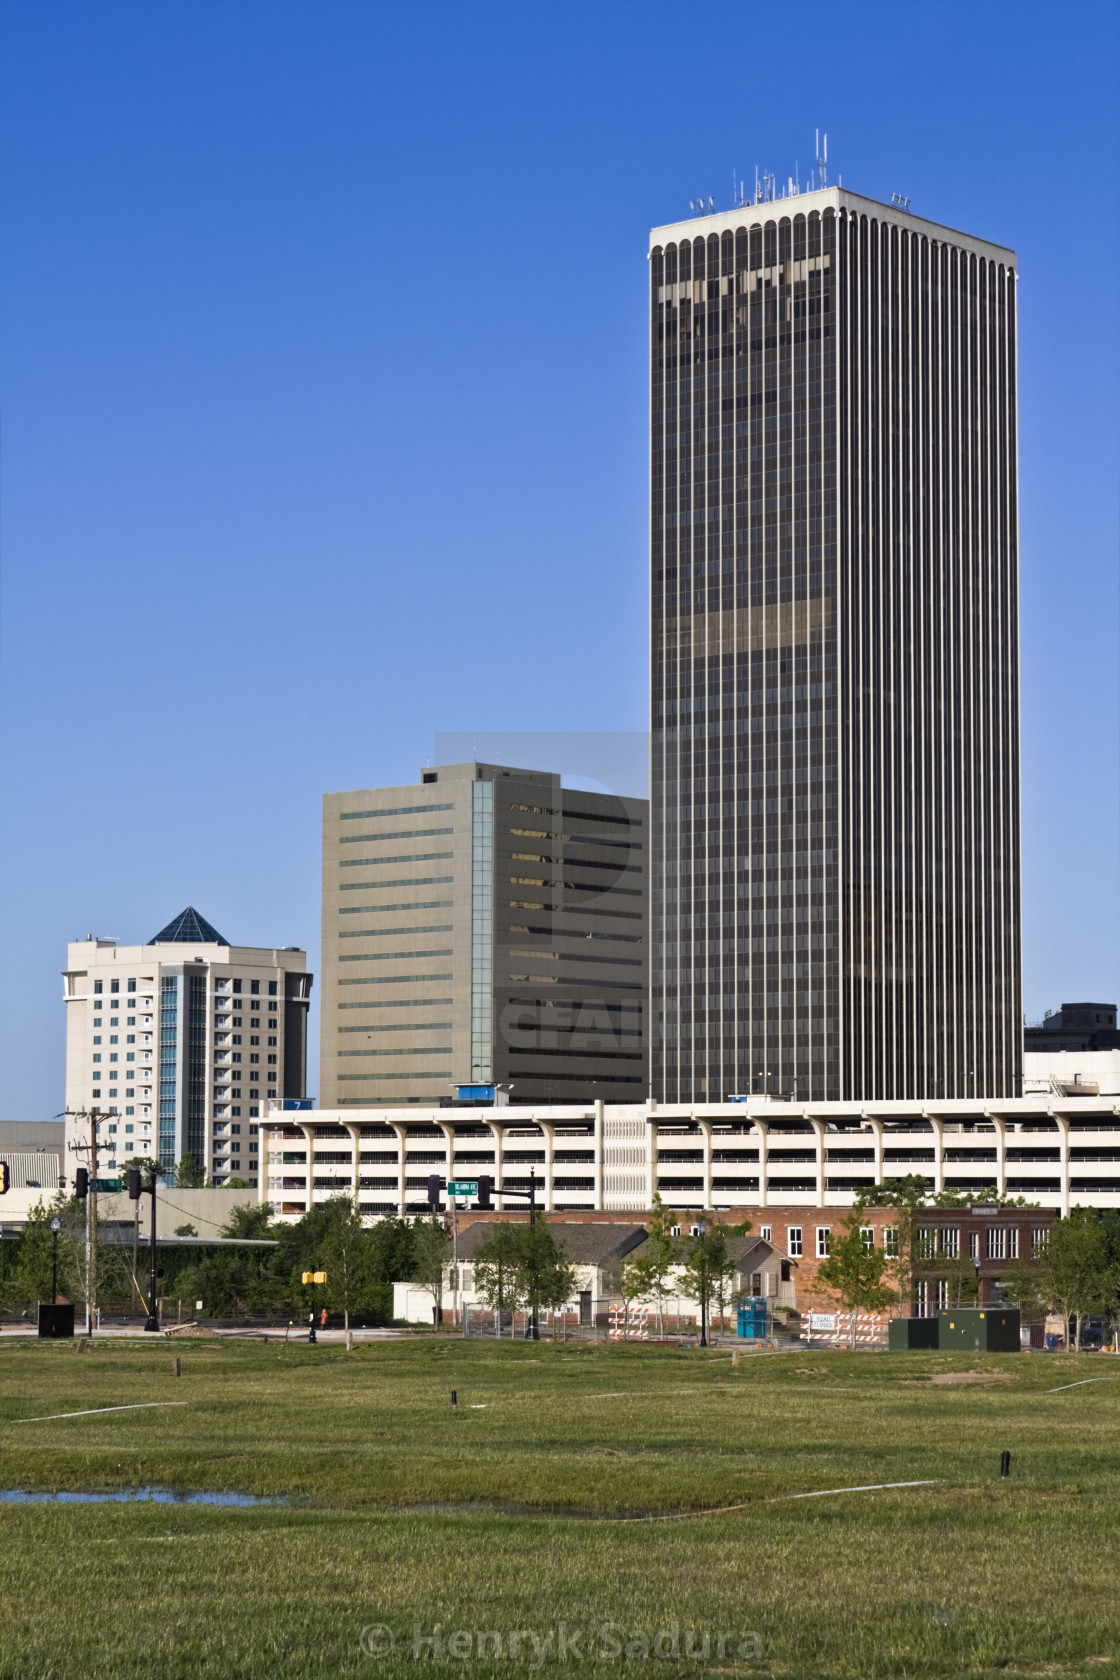 "Buildings in Oklahoma City" stock image